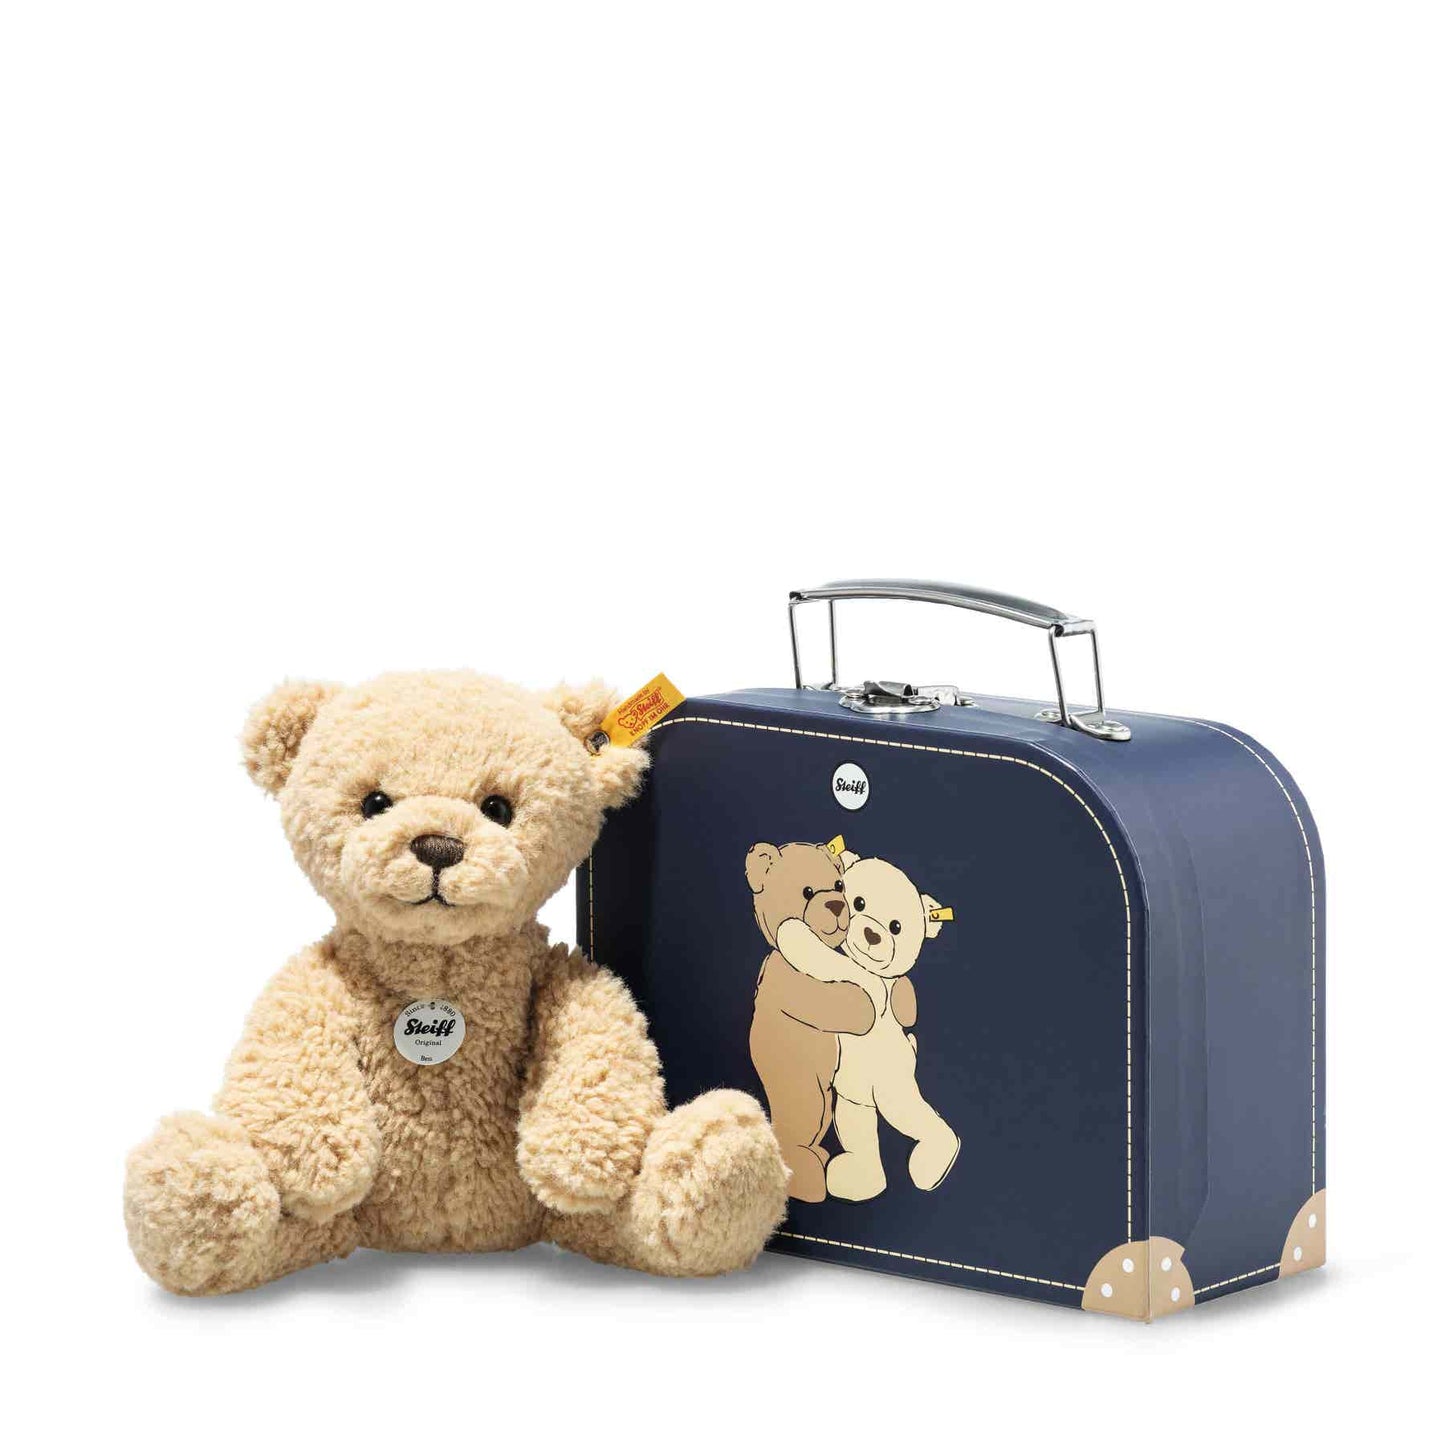 Ben Teddy Bear 21cm - Beige with Suitcase